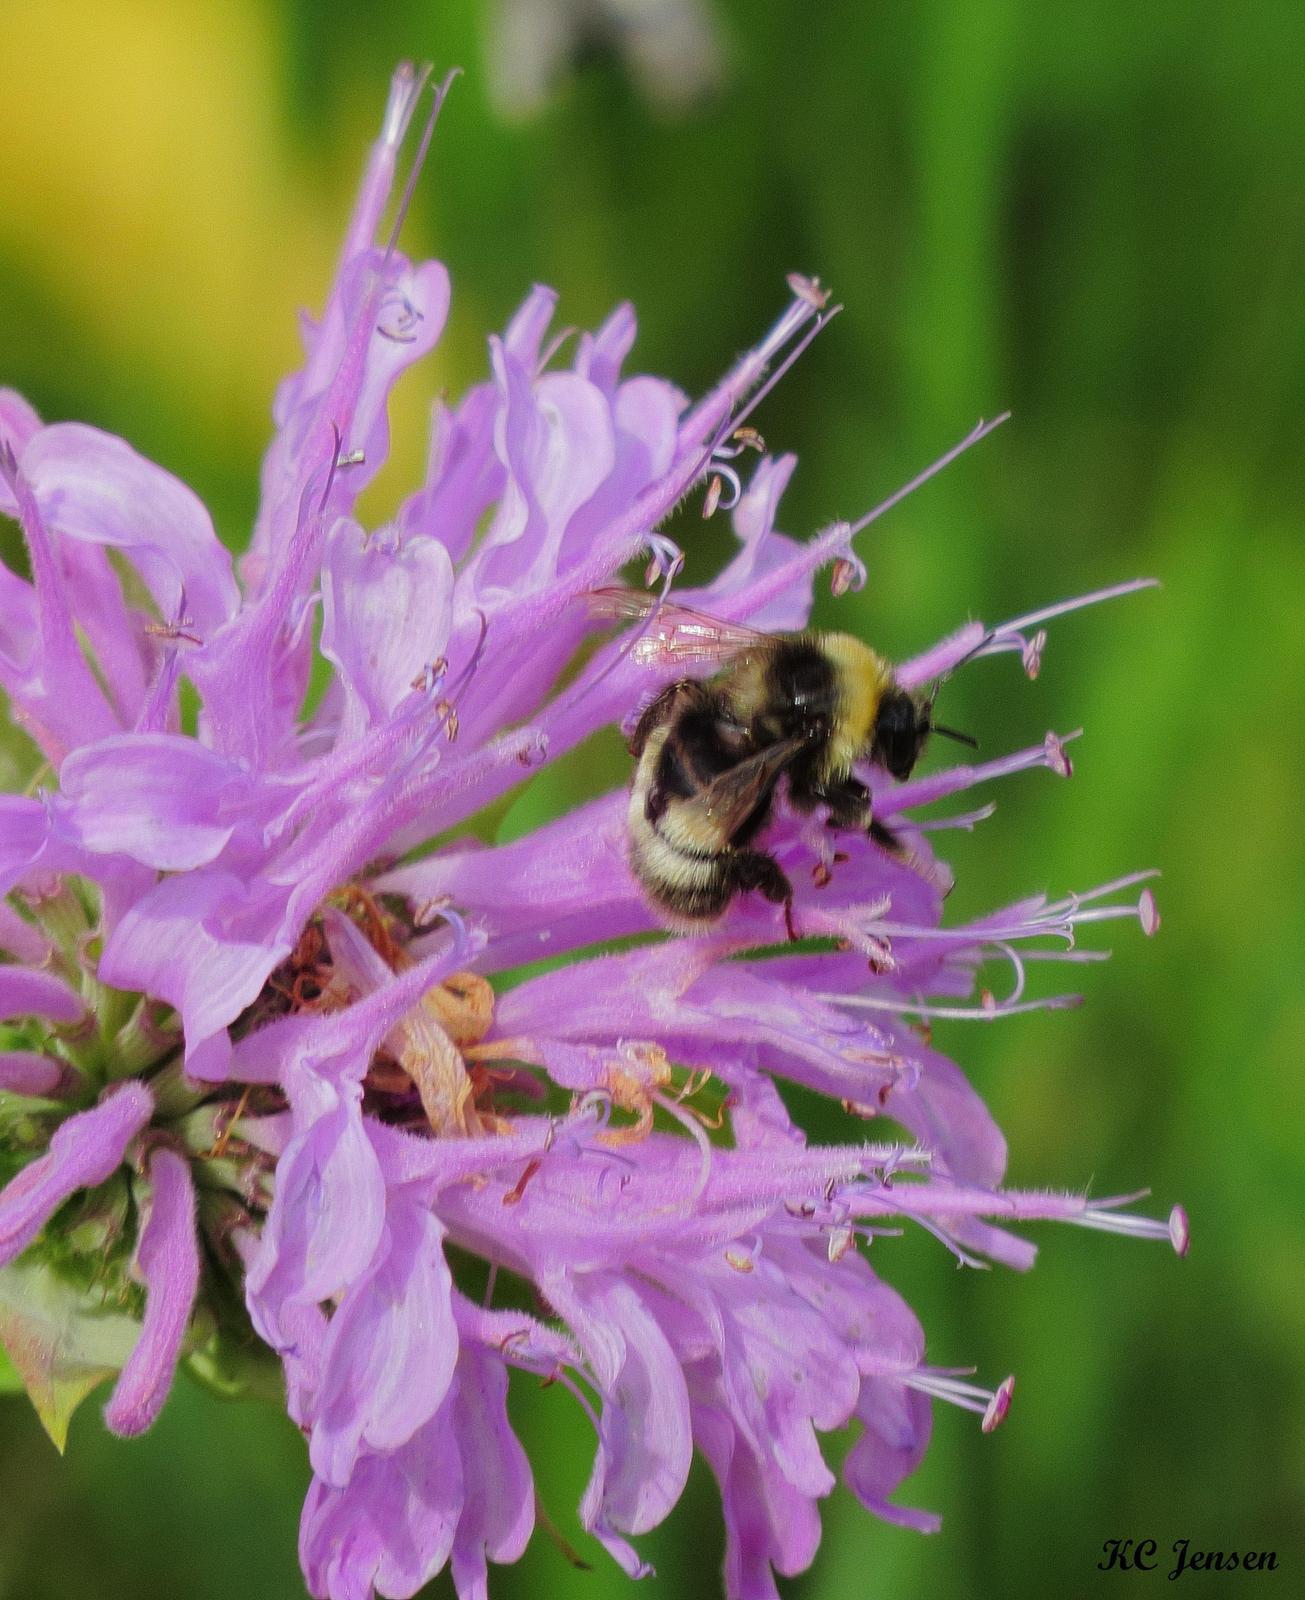 Western bumble bee Photo by Kent Jensen